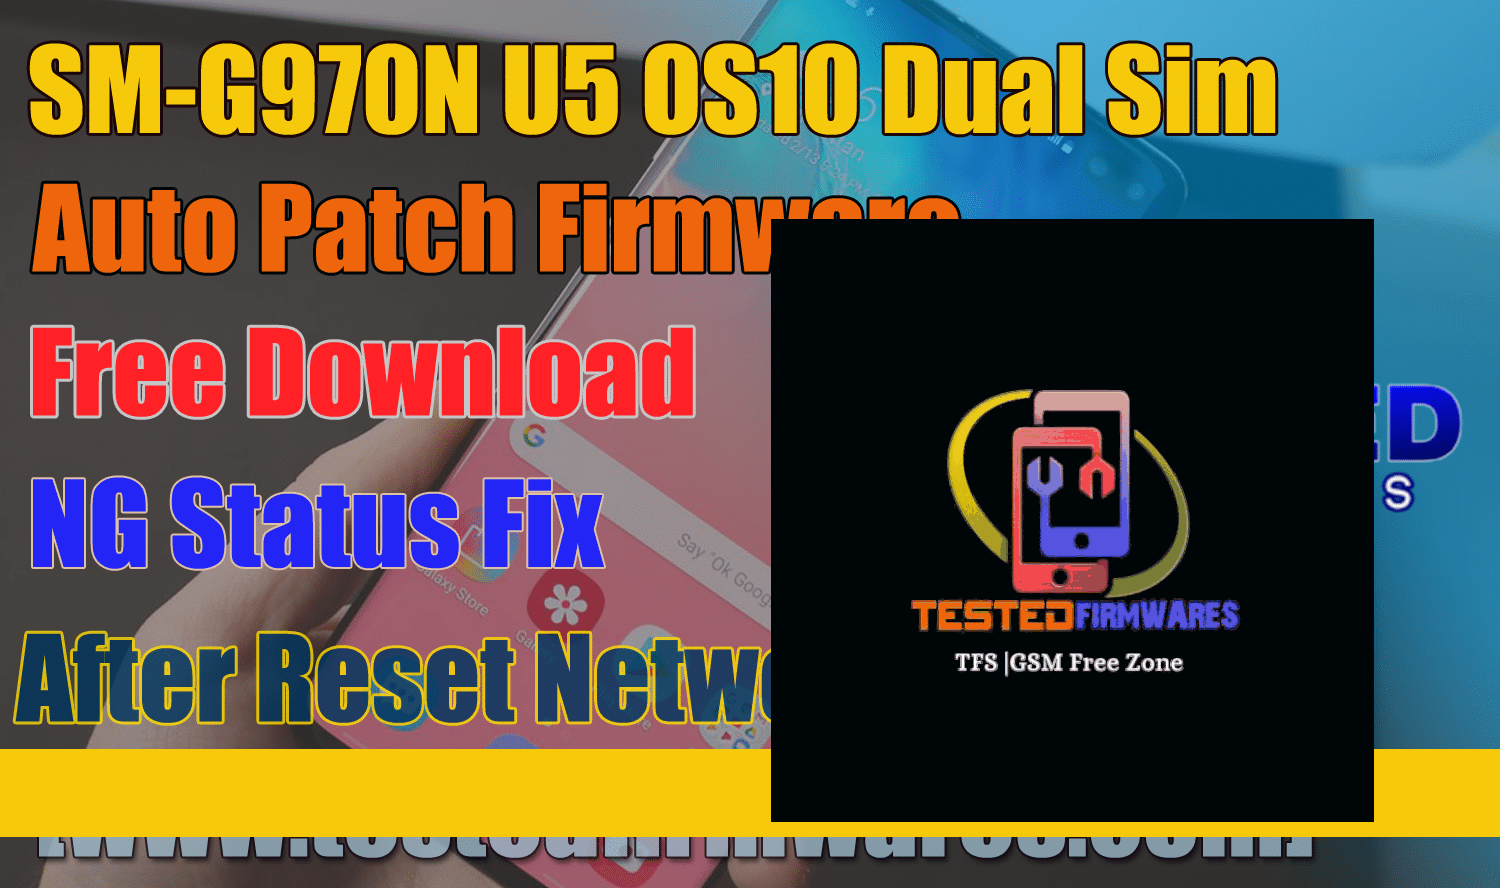 SM-G970N U5 OS10 Dual Sim Auto Patch Firmware Free Download